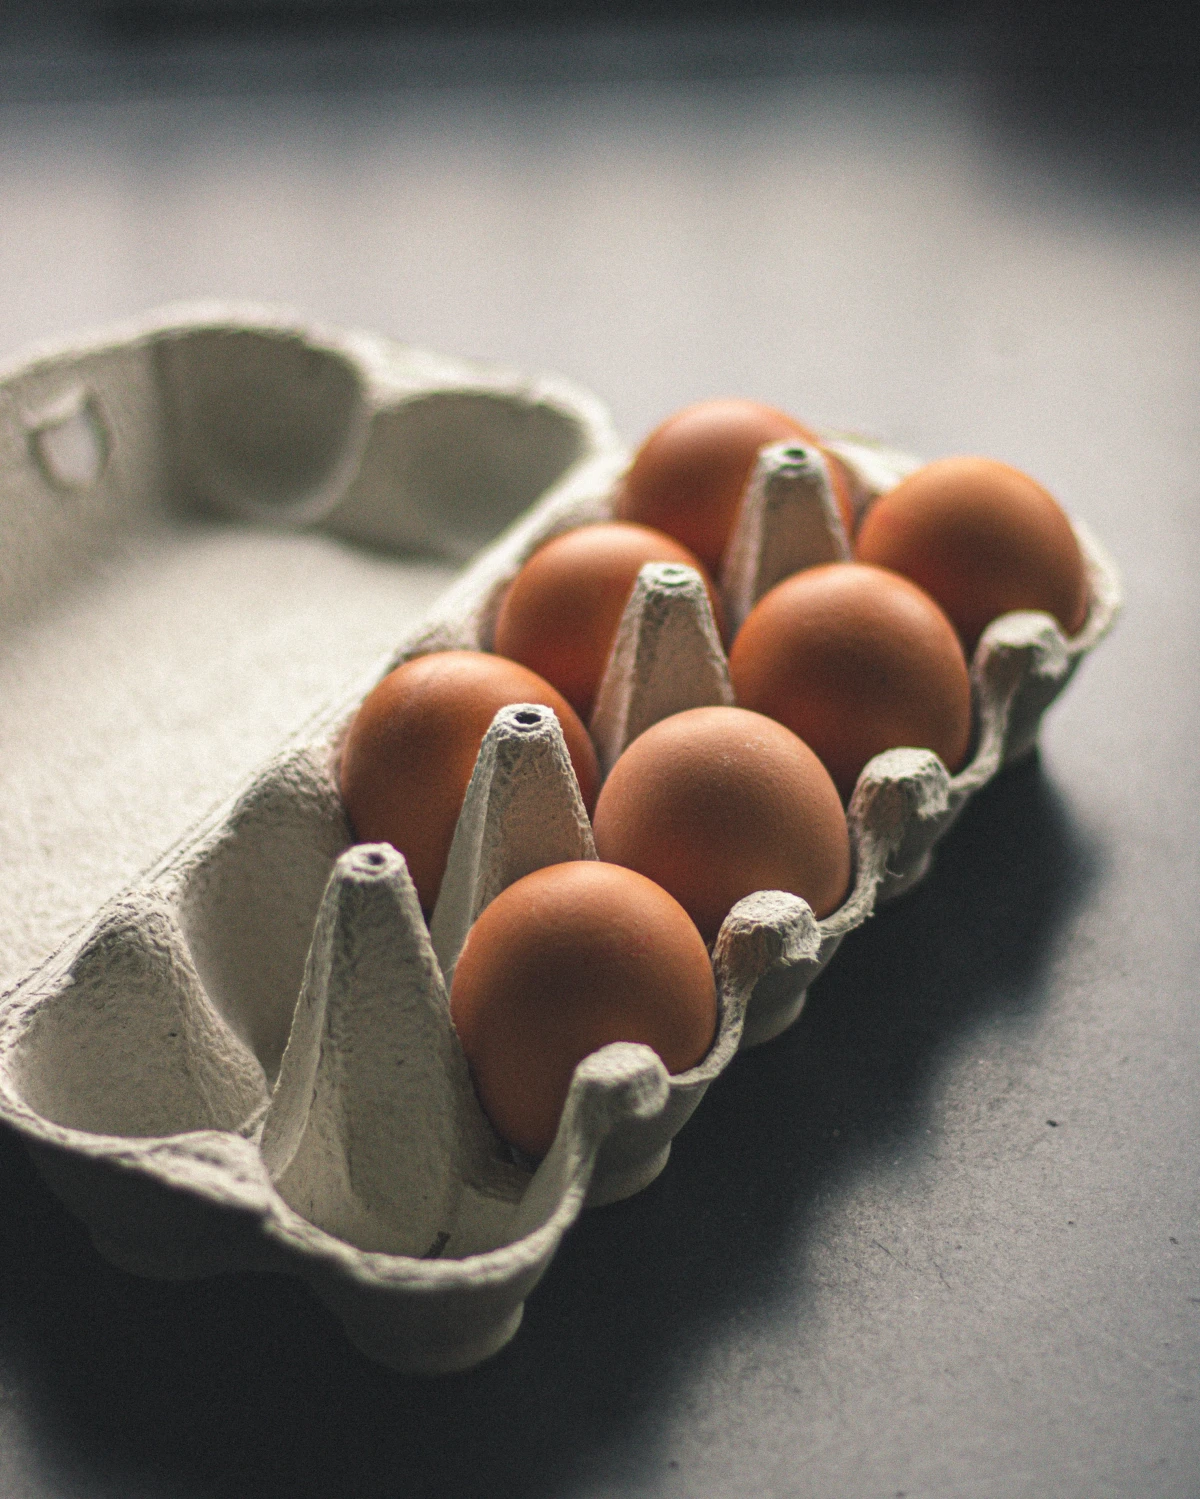 ways to reuse egg cartons carton with eggs